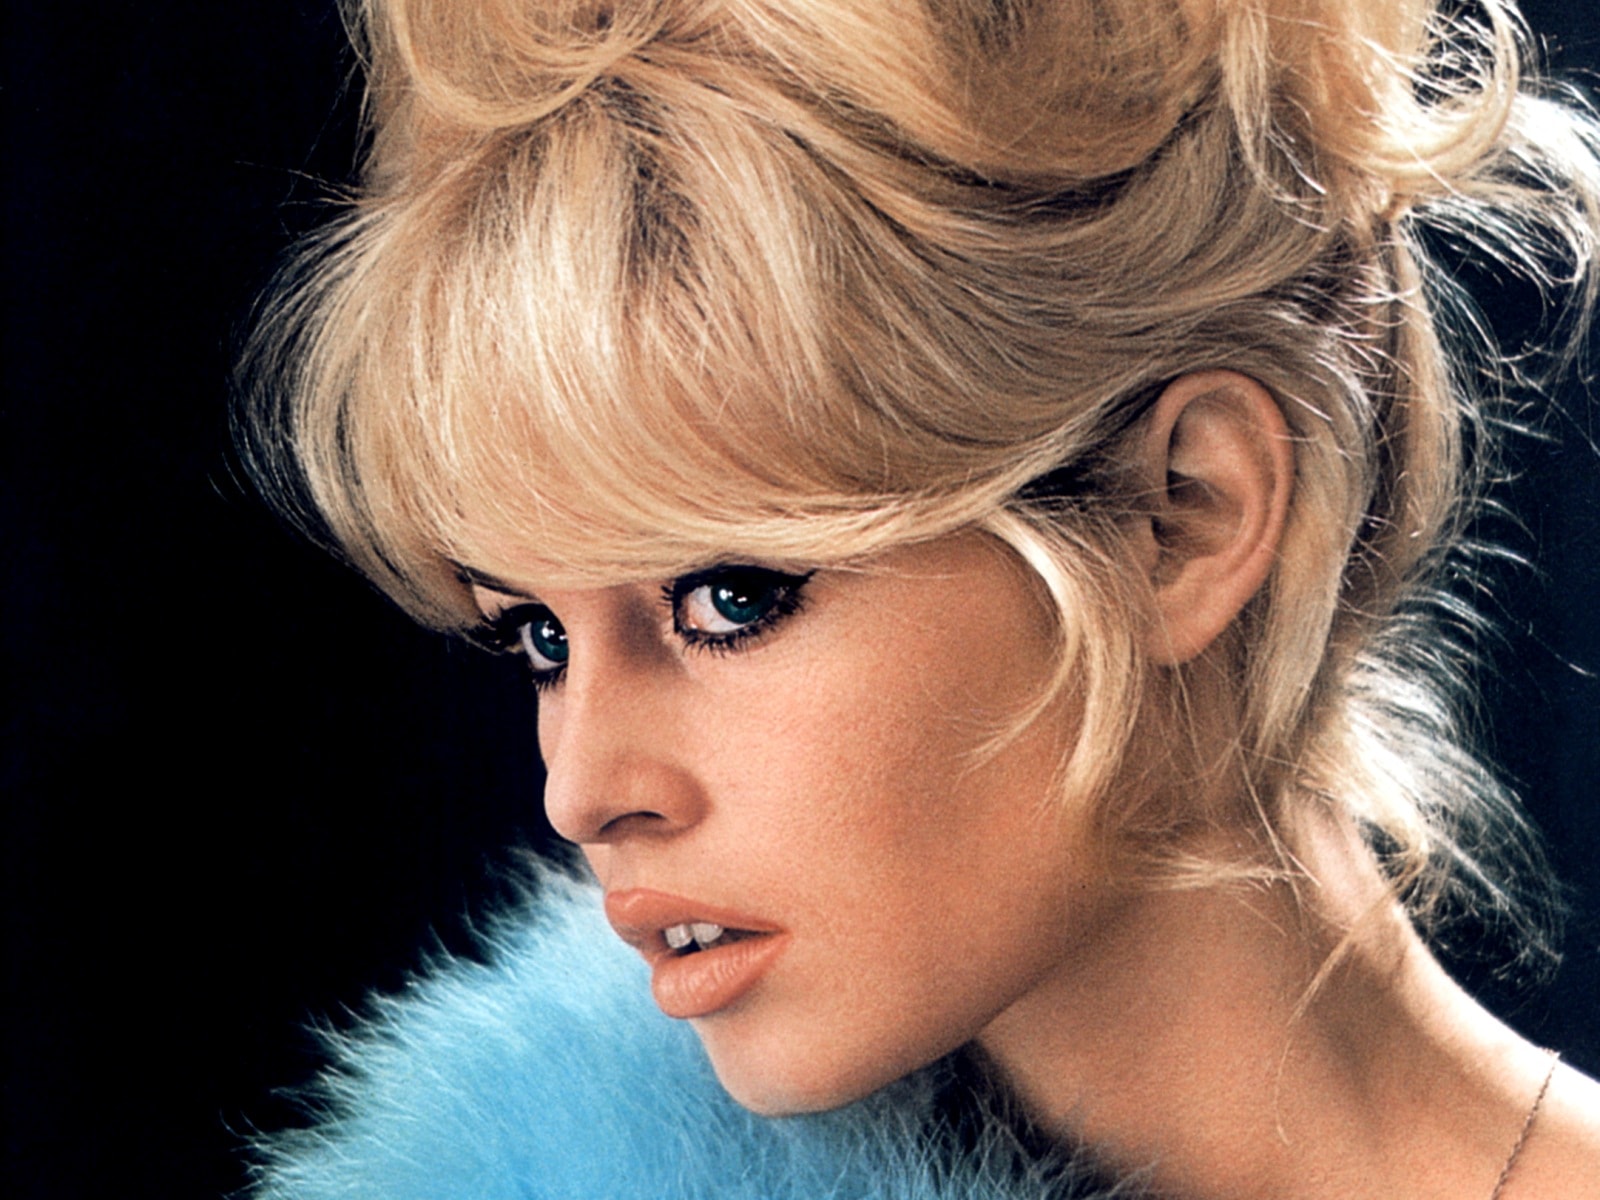 76 Brigitte Bardot Wallpaper On Wallpapersafari Images, Photos, Reviews